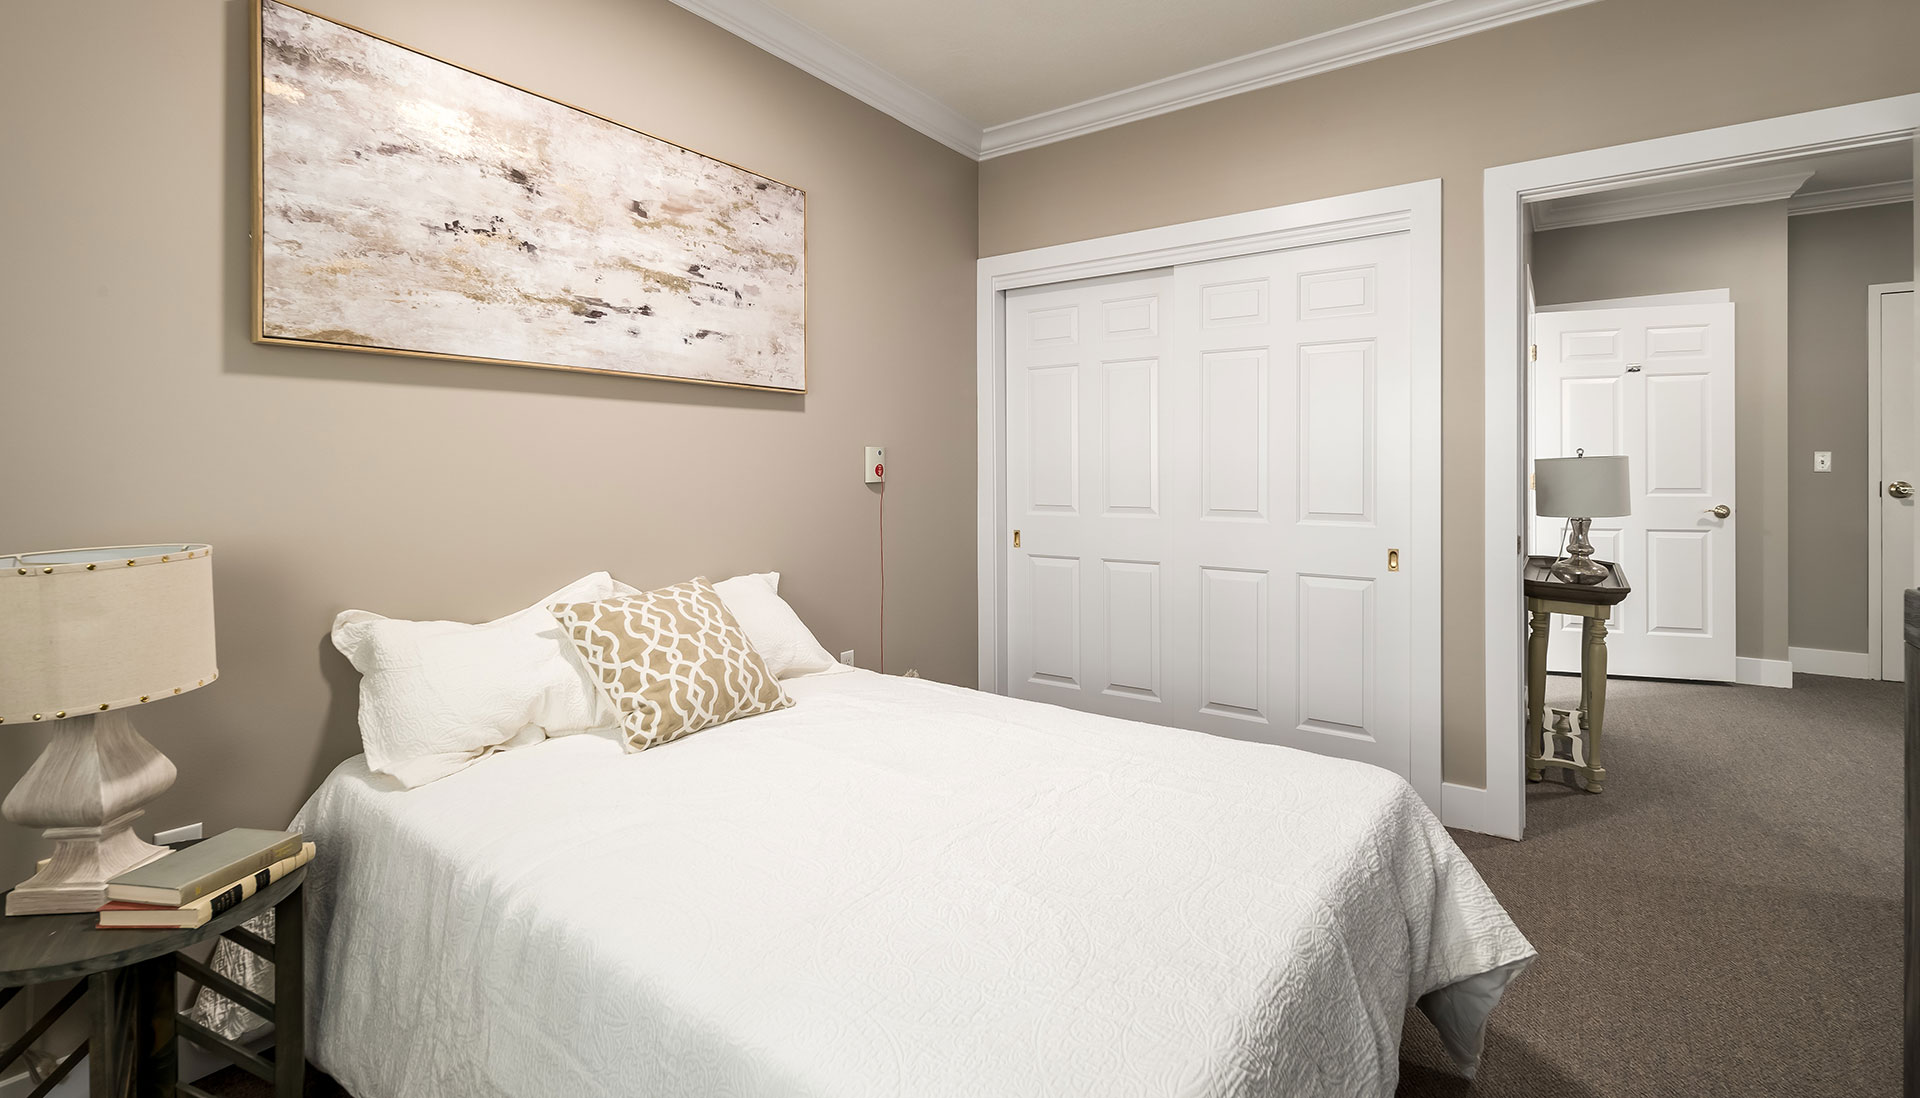 Luxury bedroom with white bedding